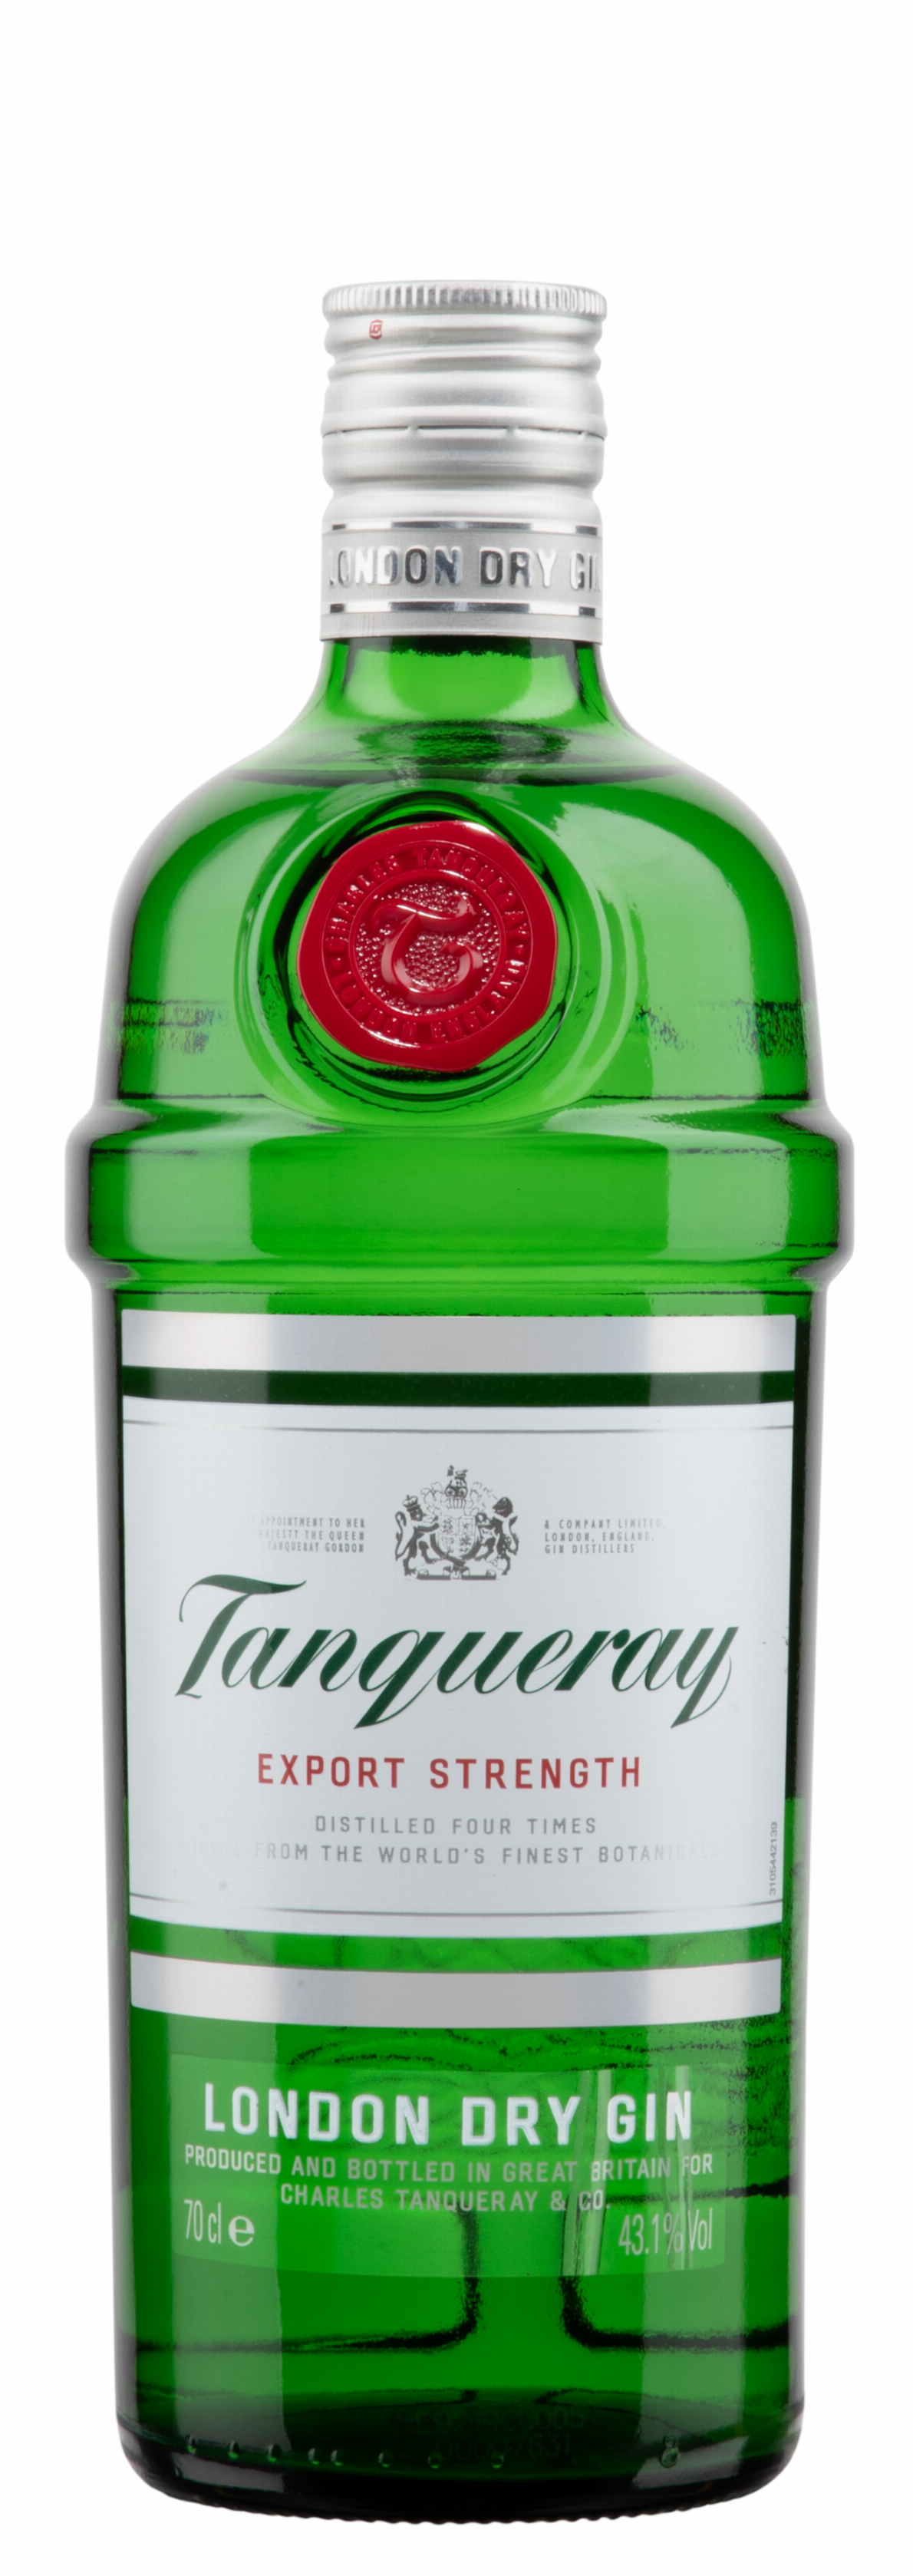 Tanqueray London Dry Gin 43.1% nach Hause liefern lassen »